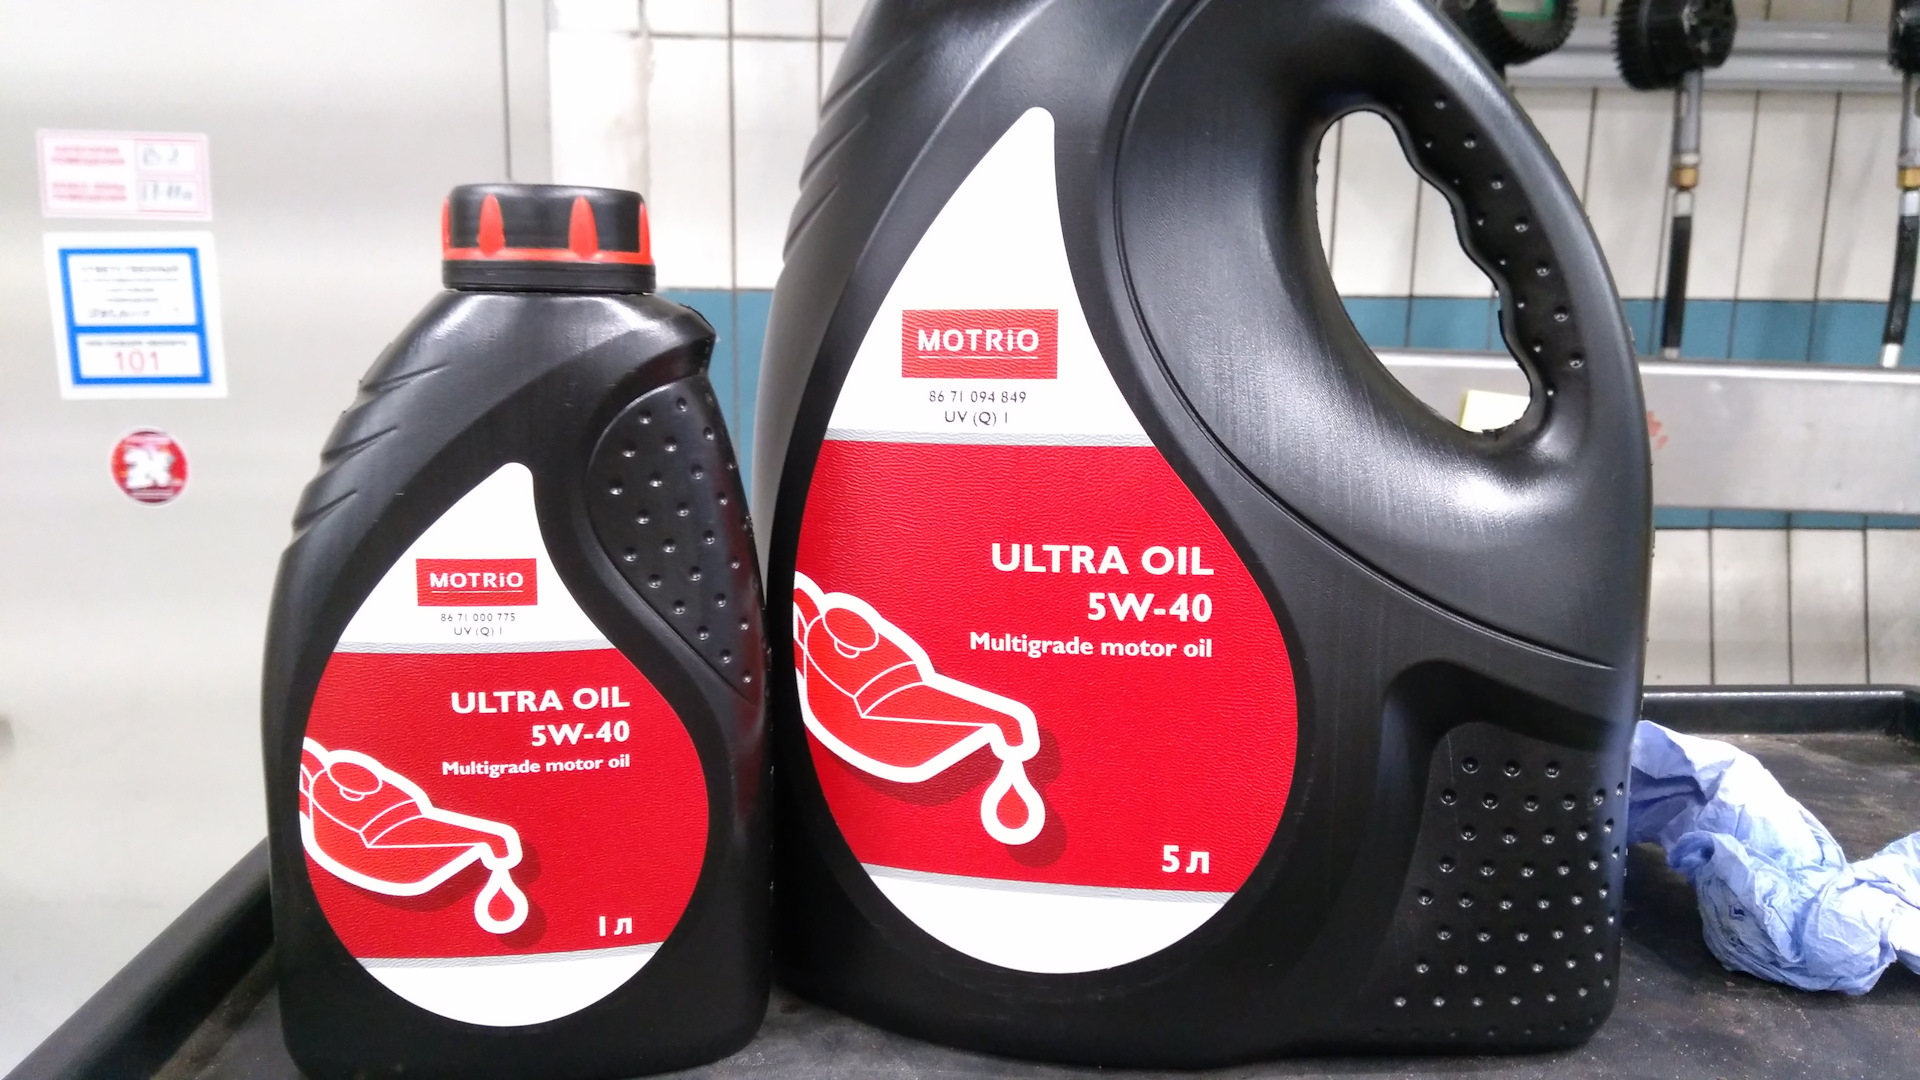 Купить 5 литров масла лукойл. Motrio 5w40. Масло motrio Ultra Oil. Renault : 8671094849. Motrio 8671094849 масло motrio Ultra 5w40.